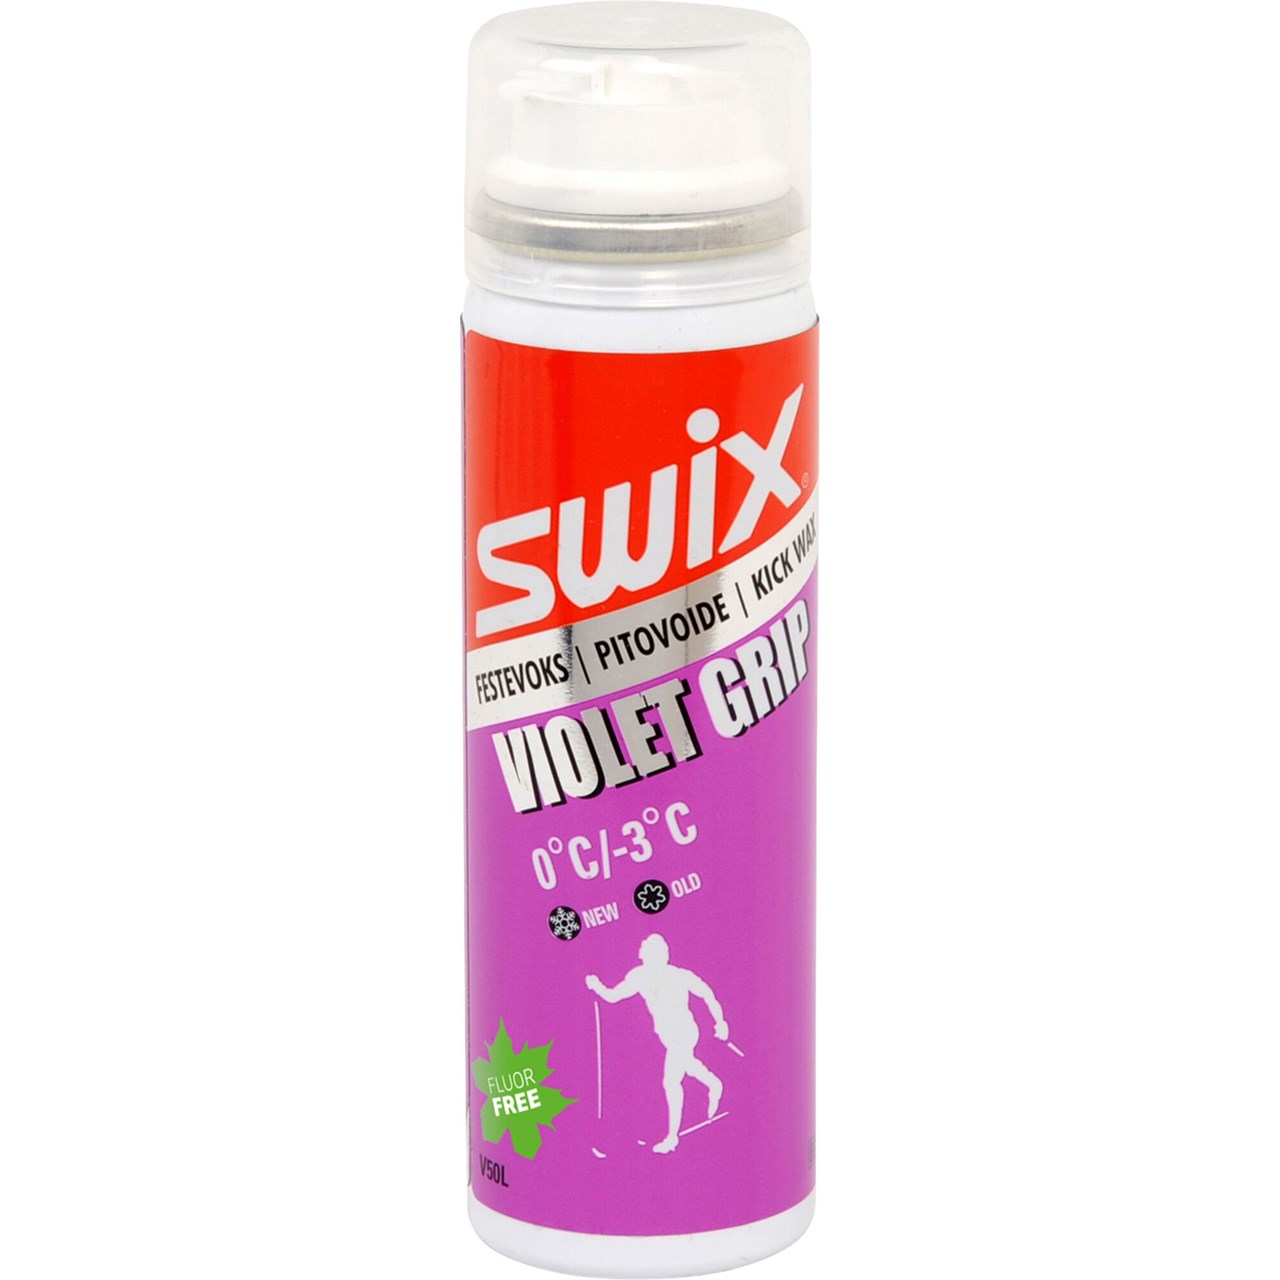 Swix (Easy) Violet 0/-3 Grip 70ml